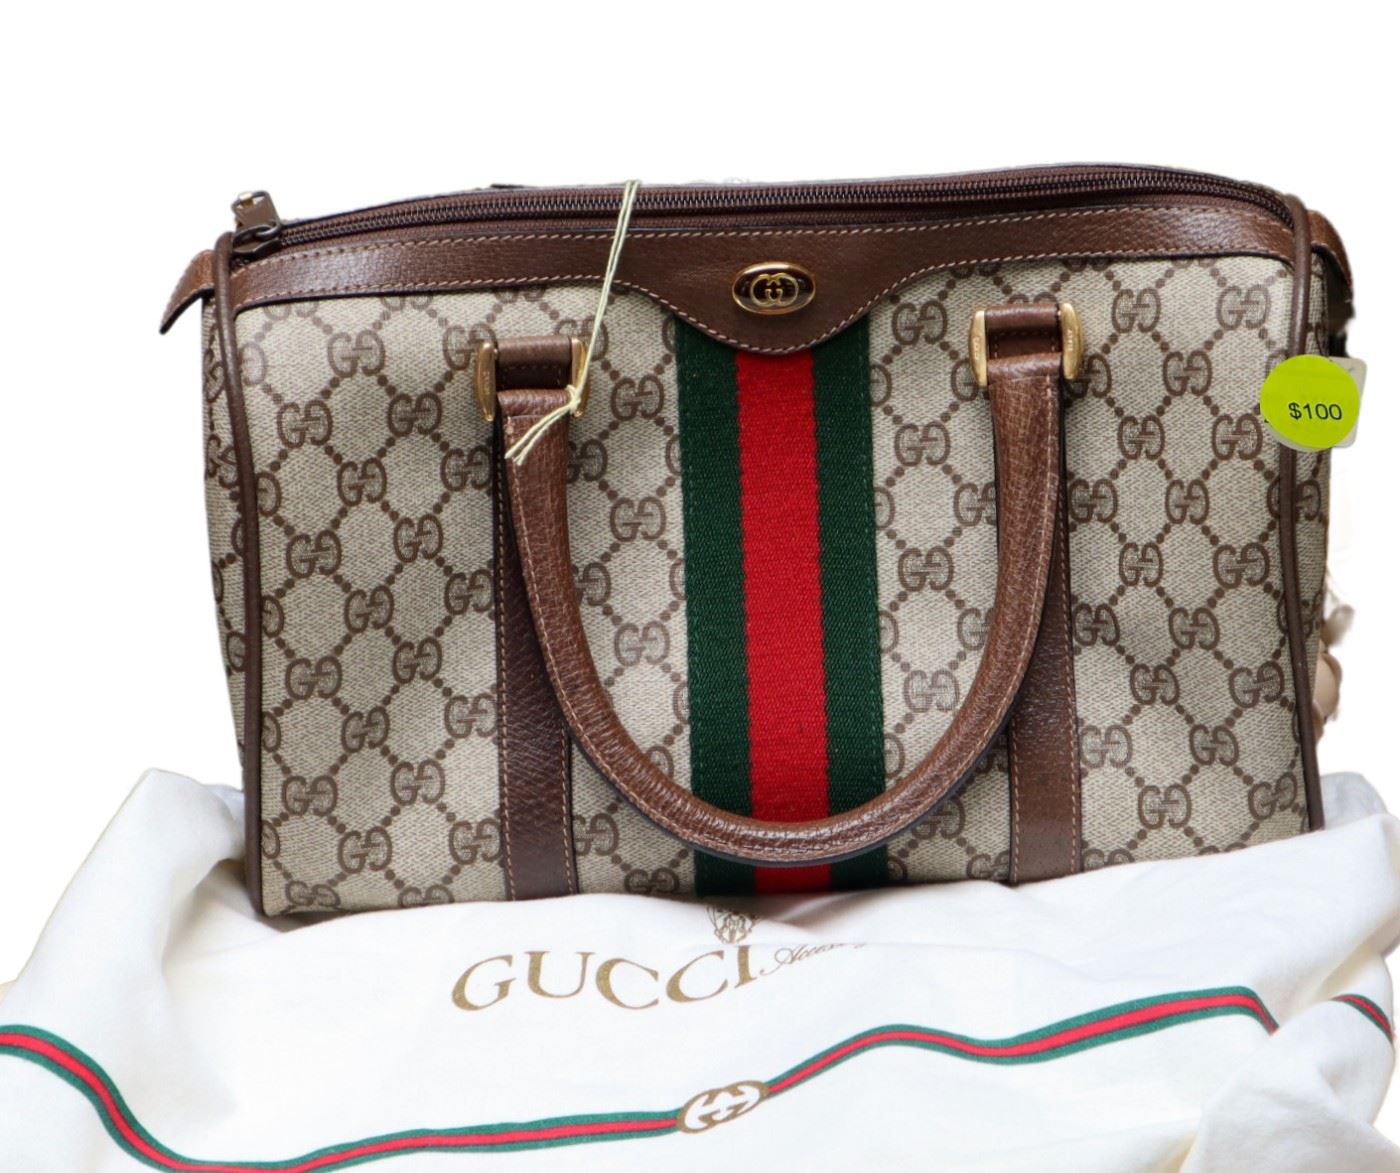 Gucci handbag with cloth bag